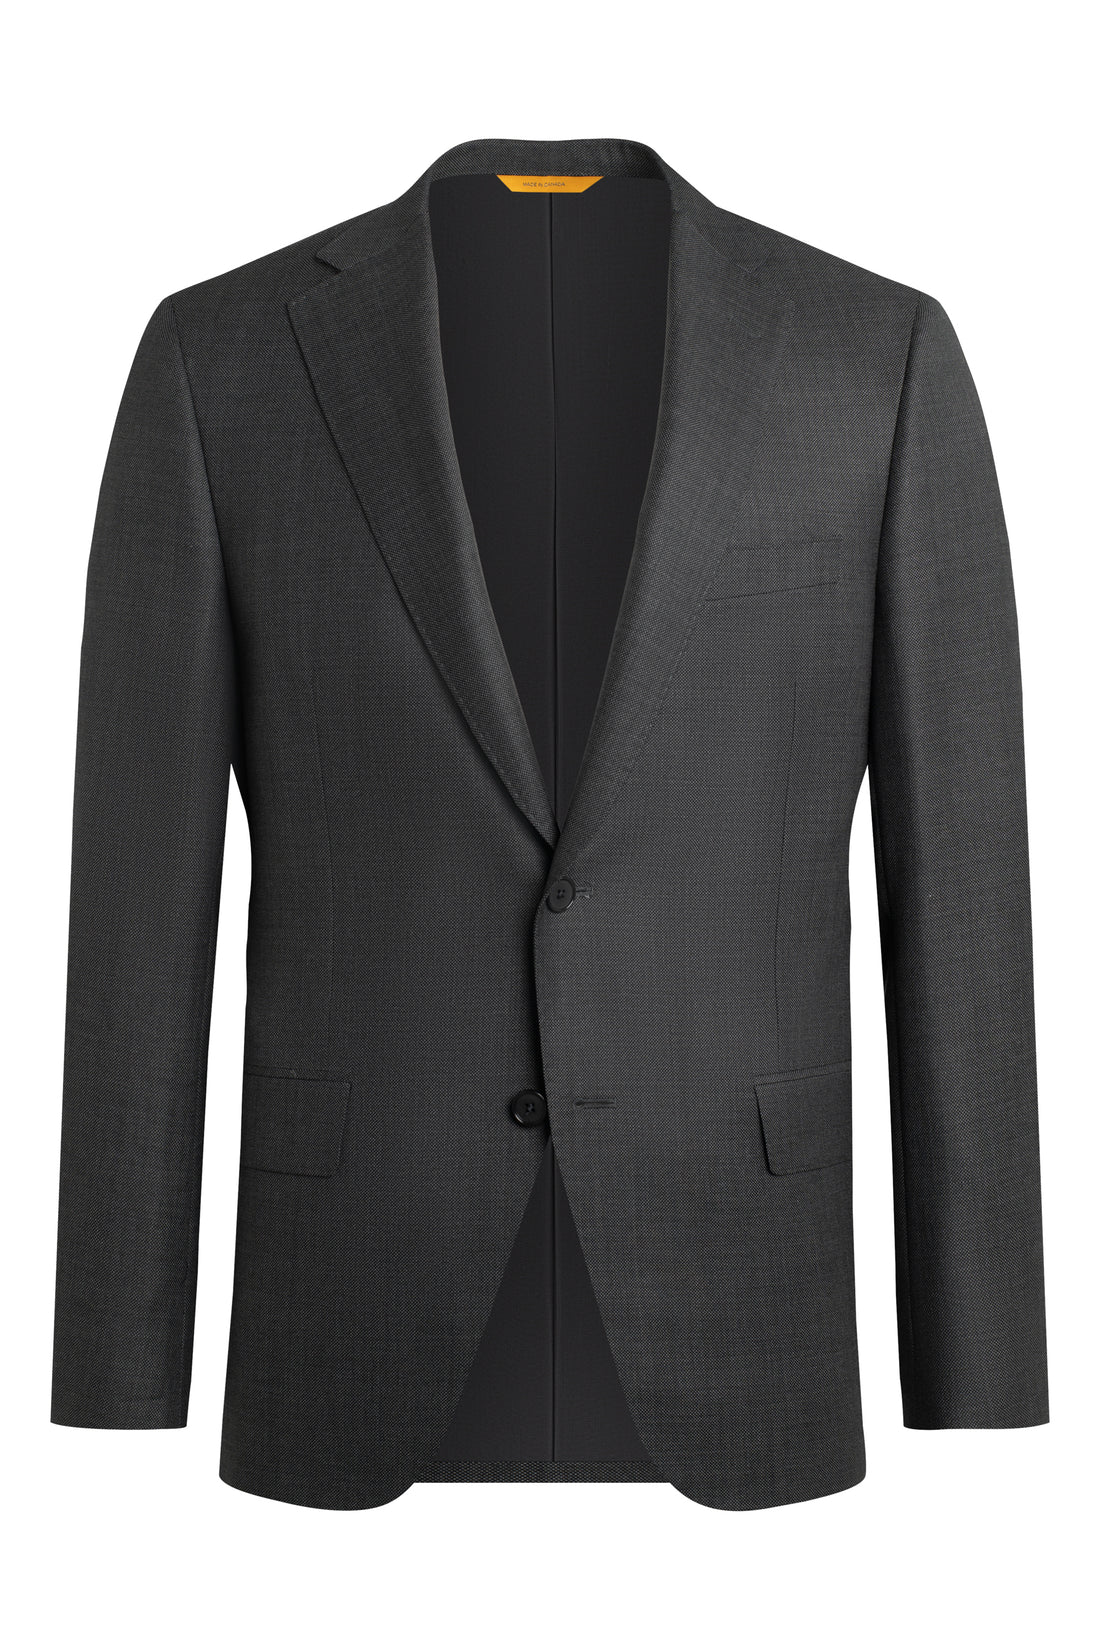 Grey Super 150s Birdseye Suit jacket